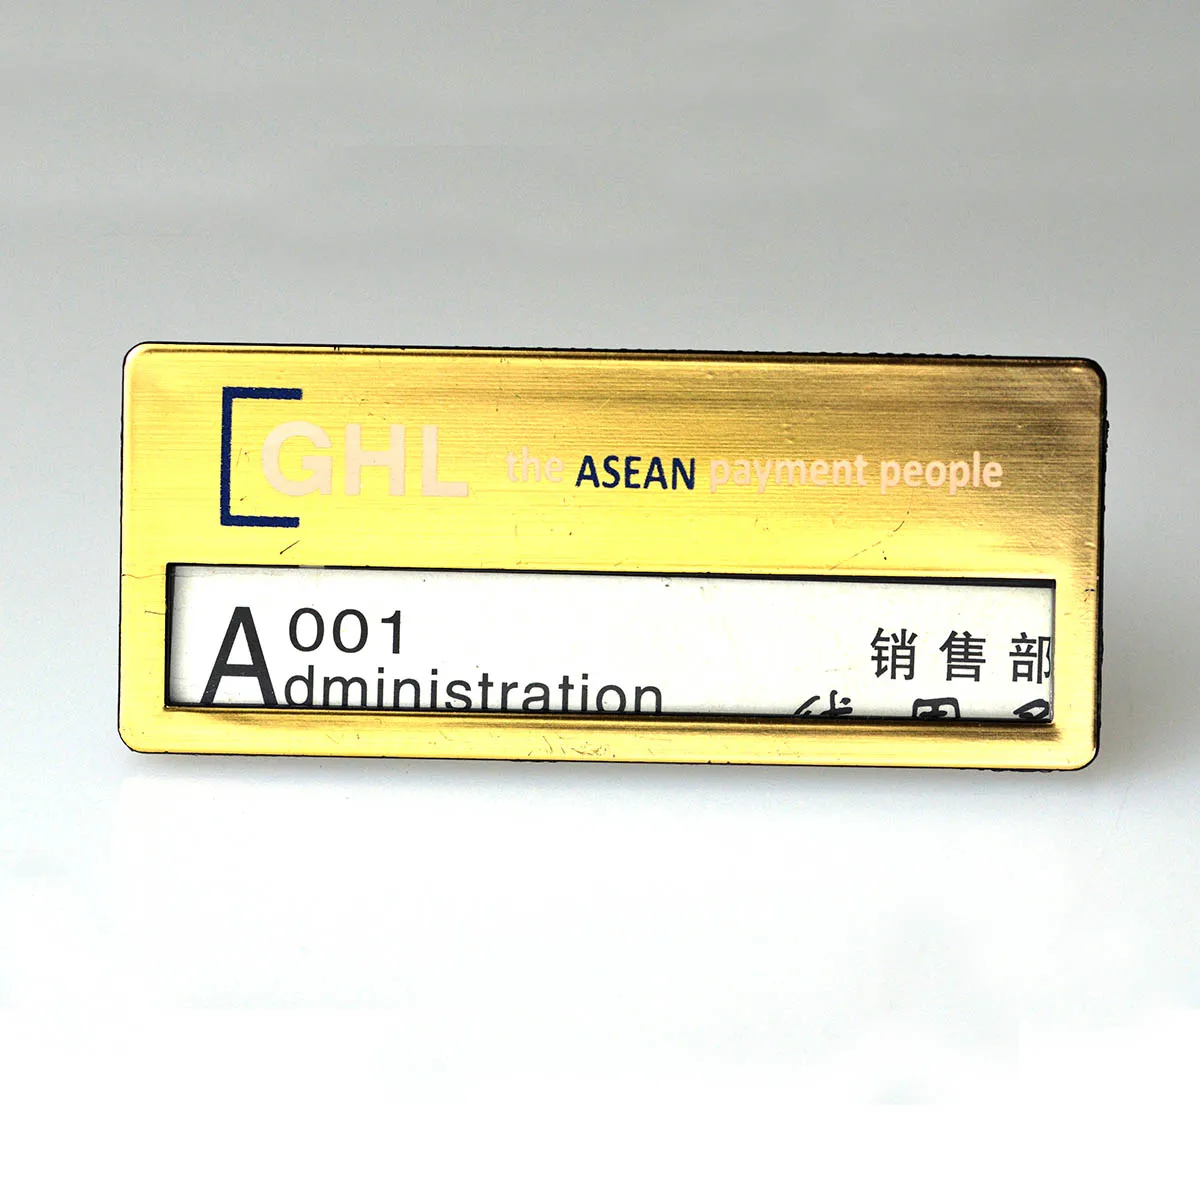 Custom Made Blank Metal and Plastic Magnet Clip Holder Magnetic Name Badge